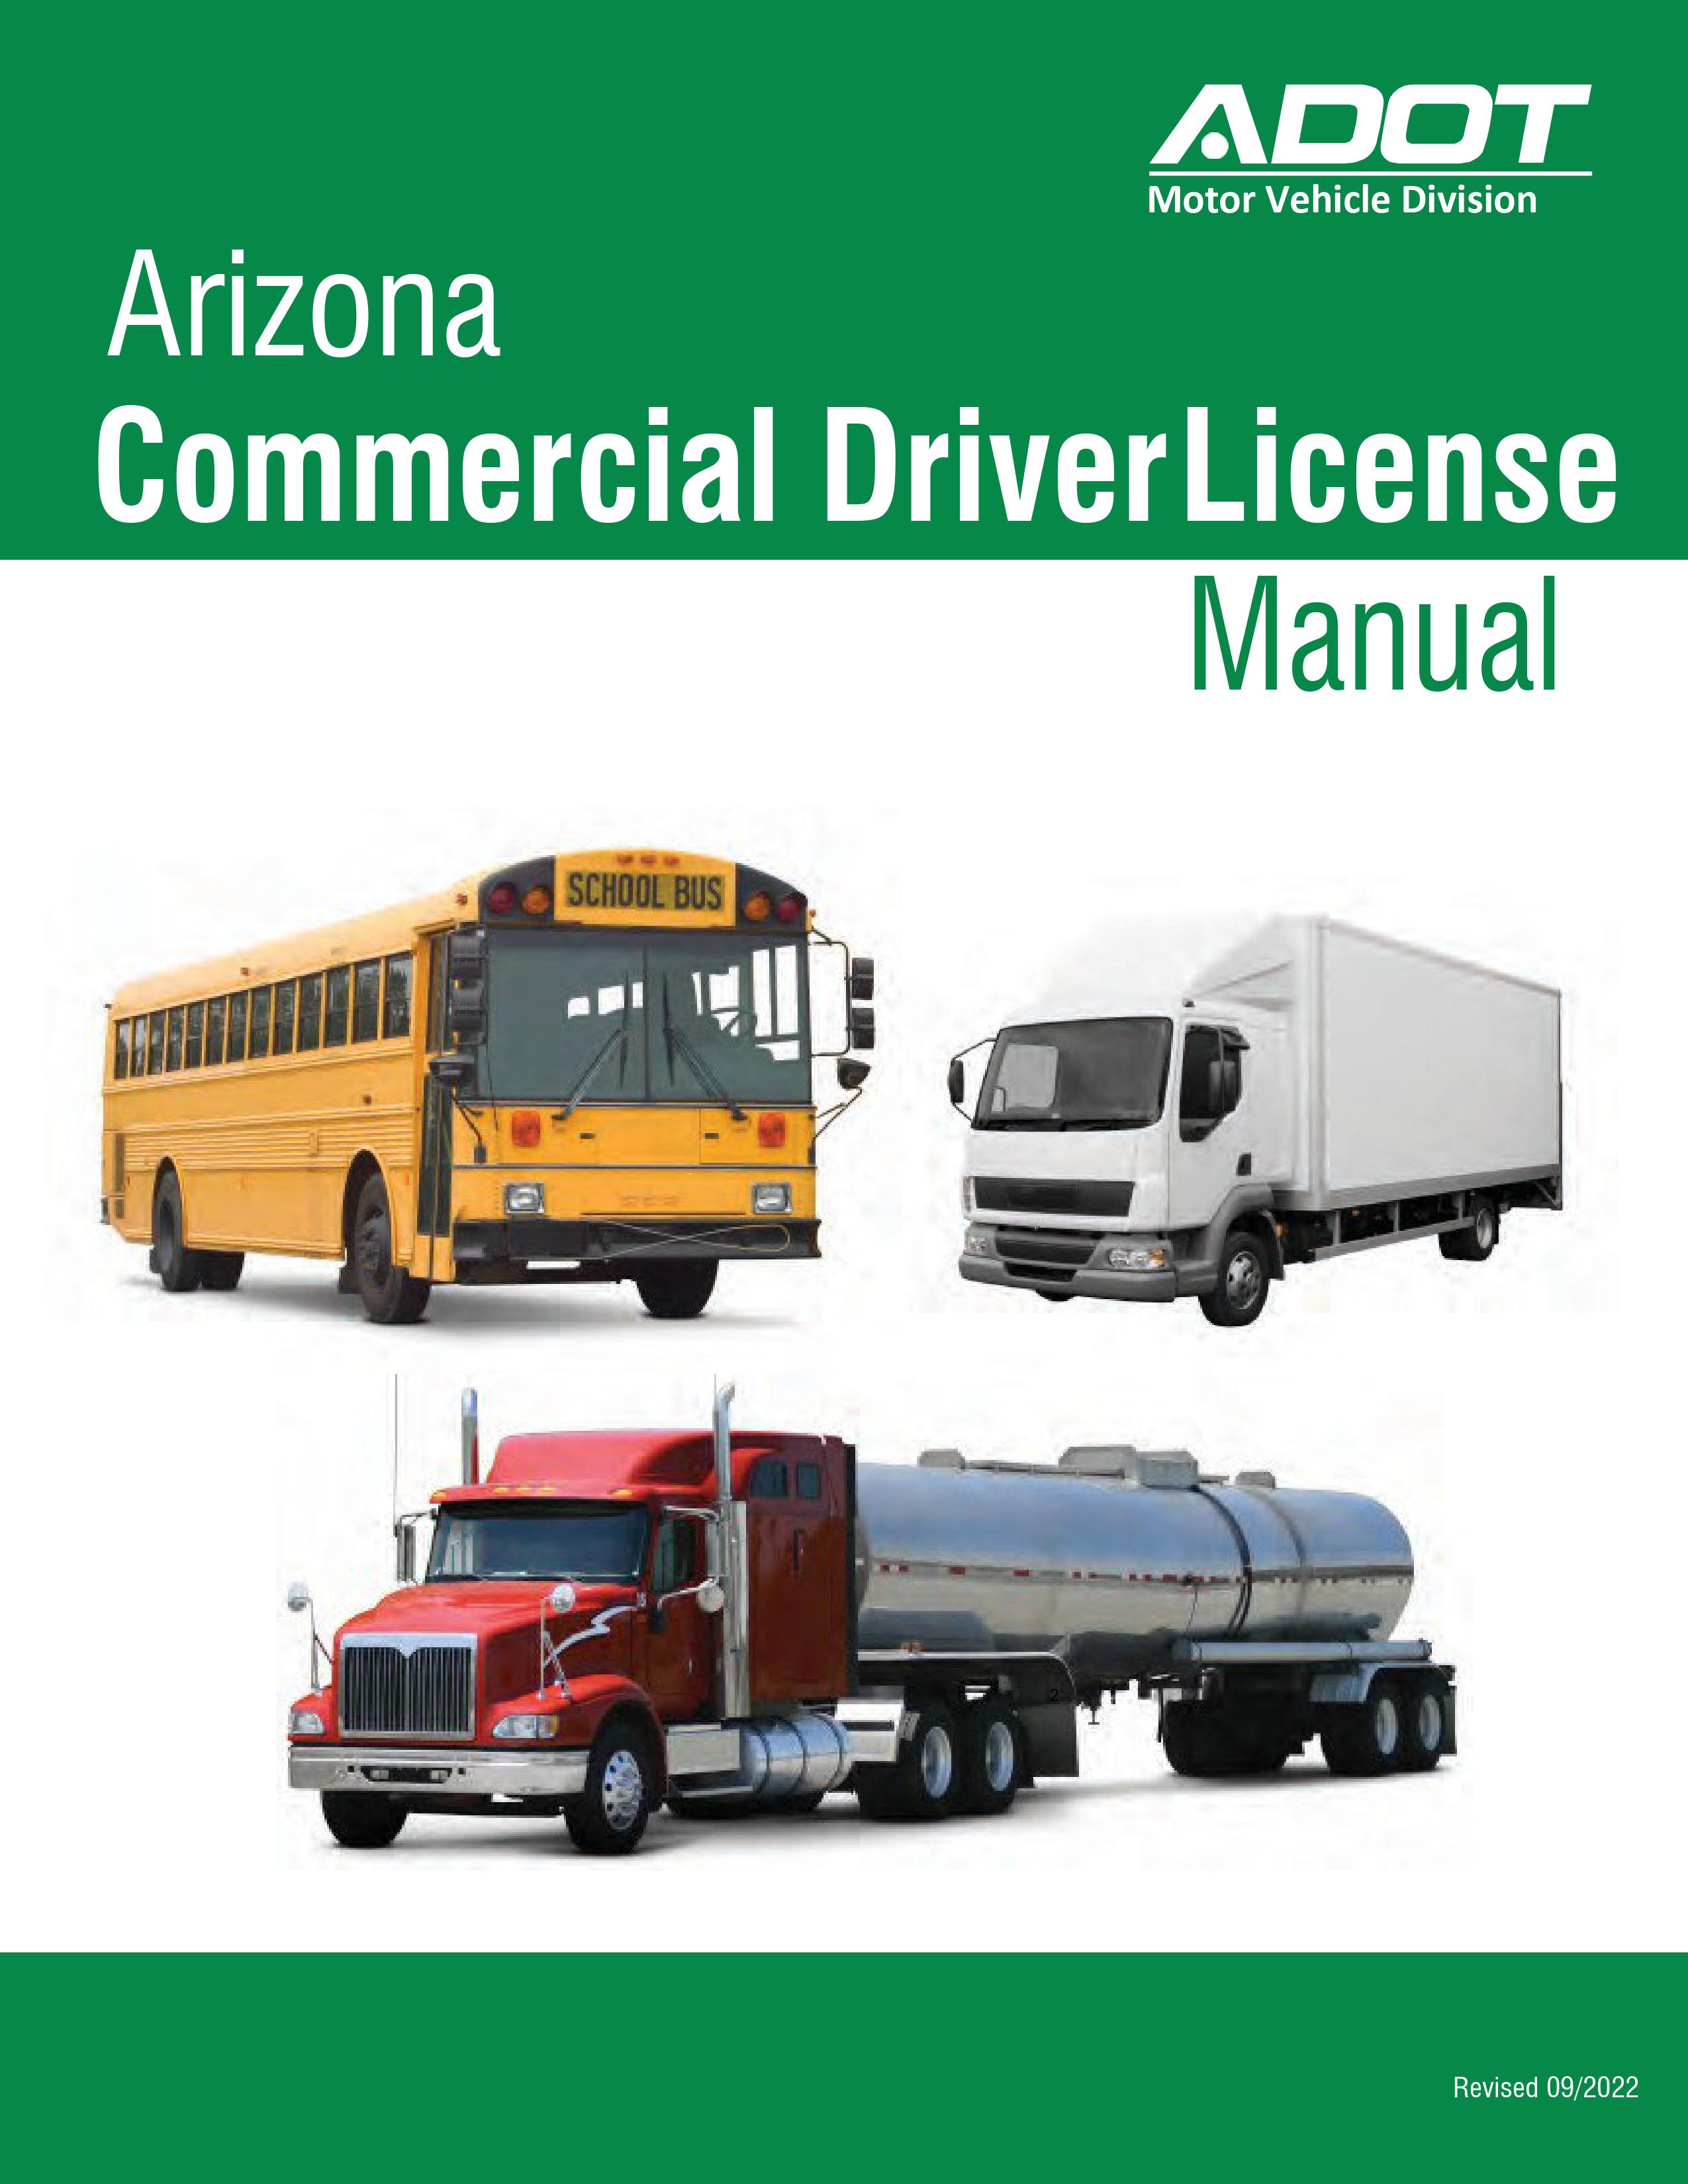 Arizona's CDL Manual